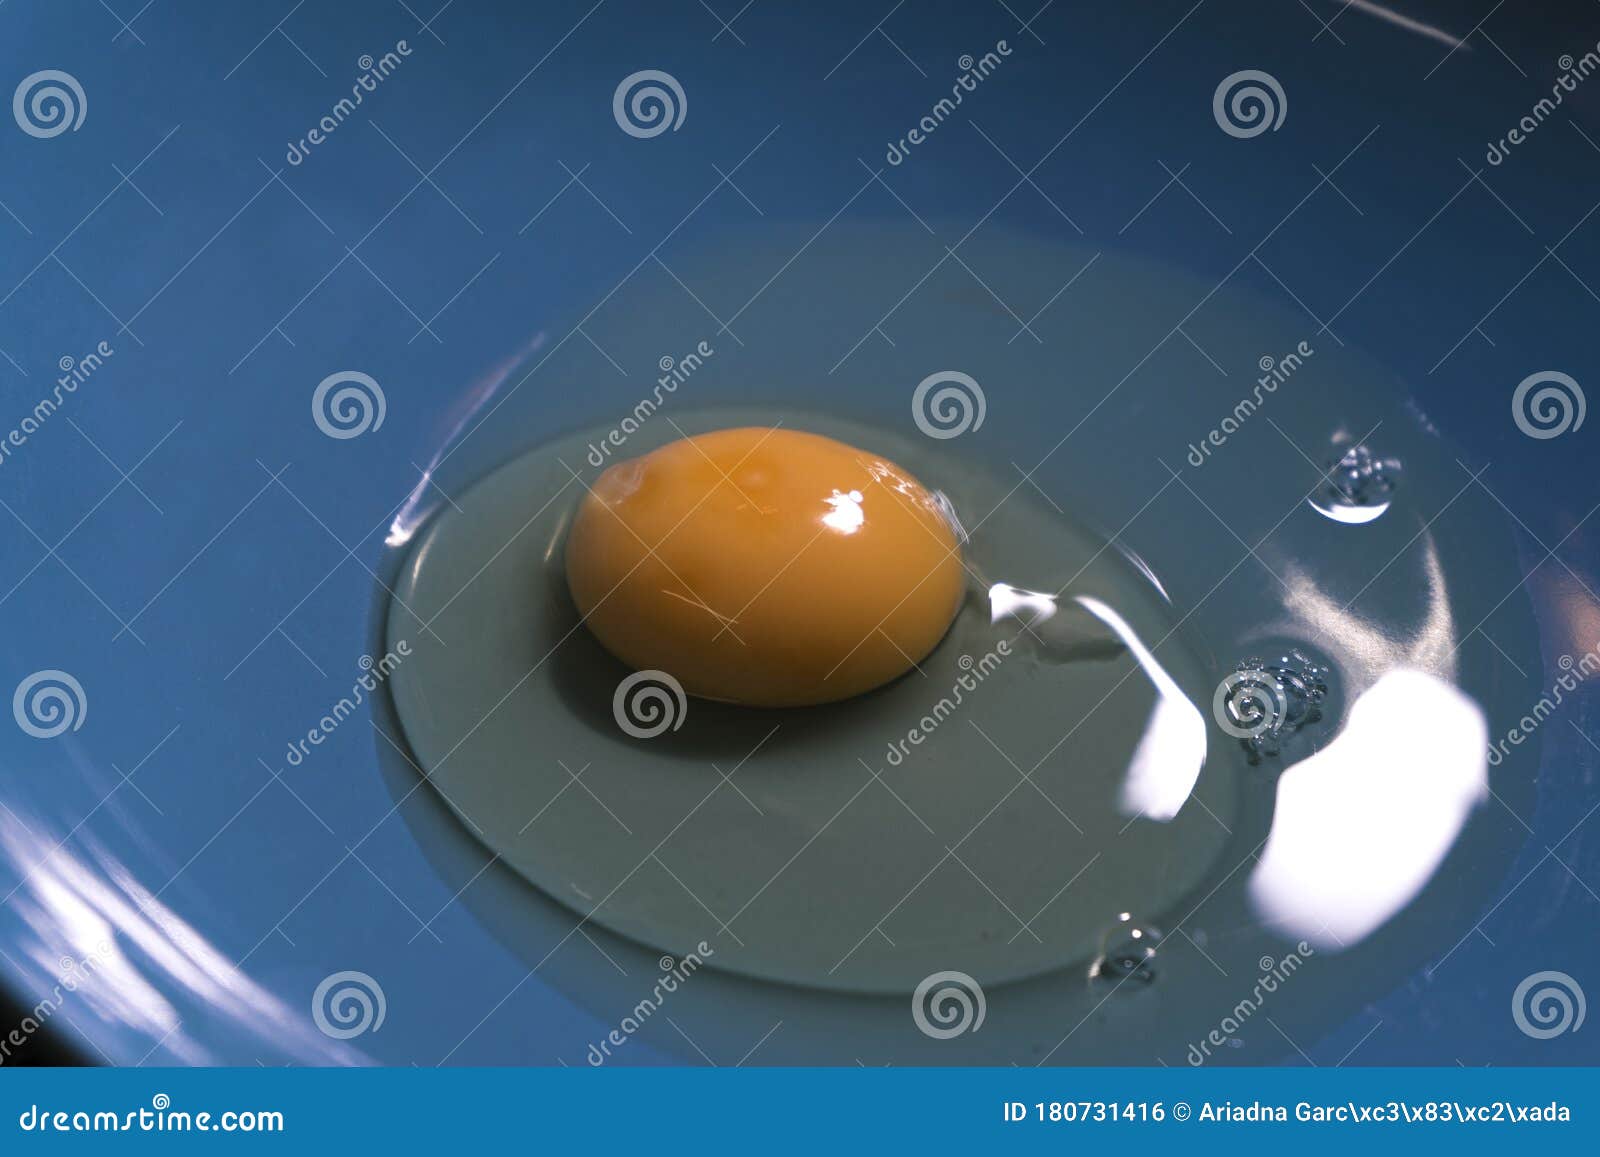 a raw egg inside a blue plate.